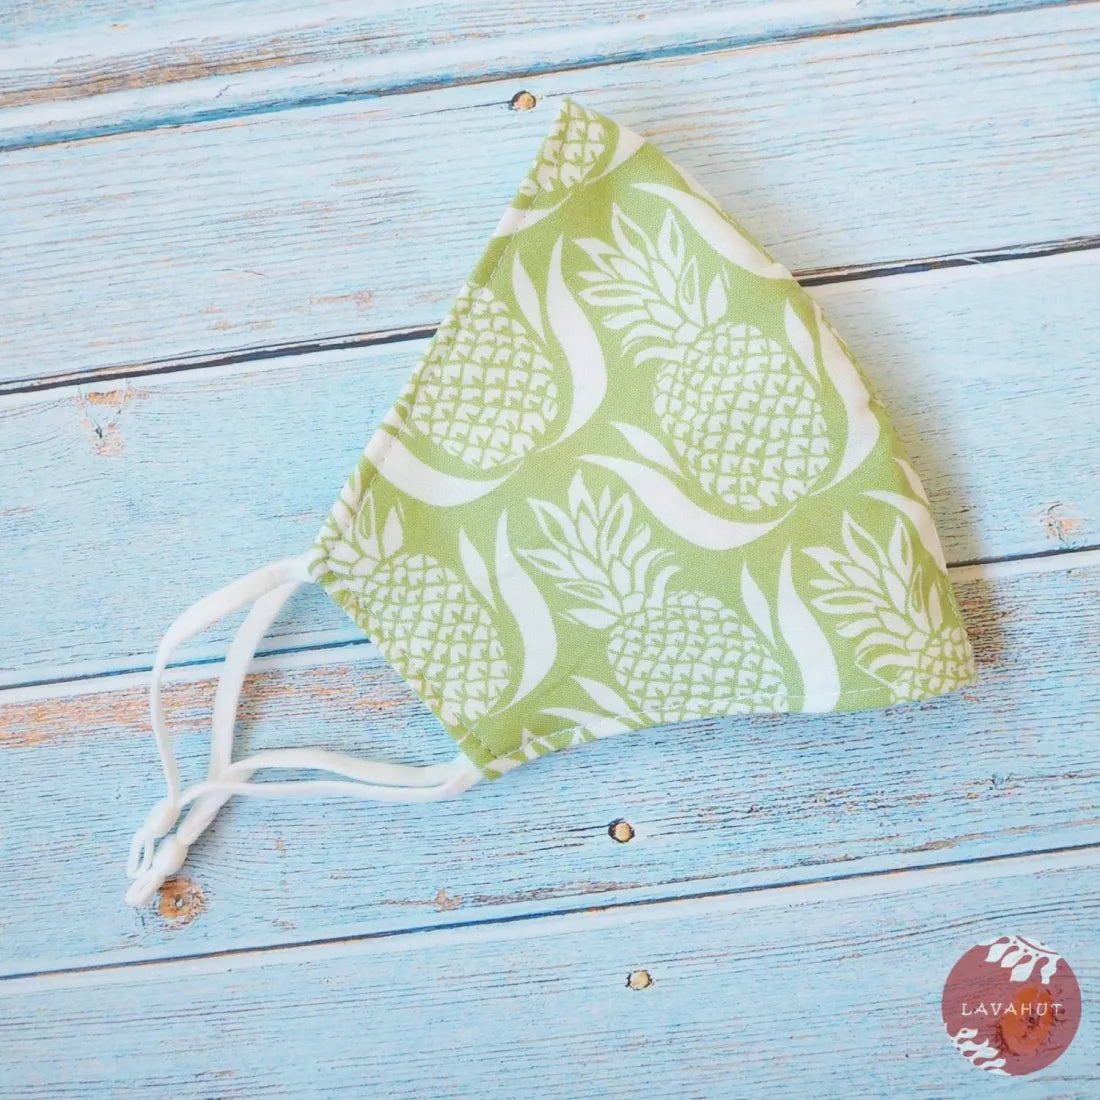 Adjustable + Filter Pocket • Green Royal Pineapple - Made In Hawaii